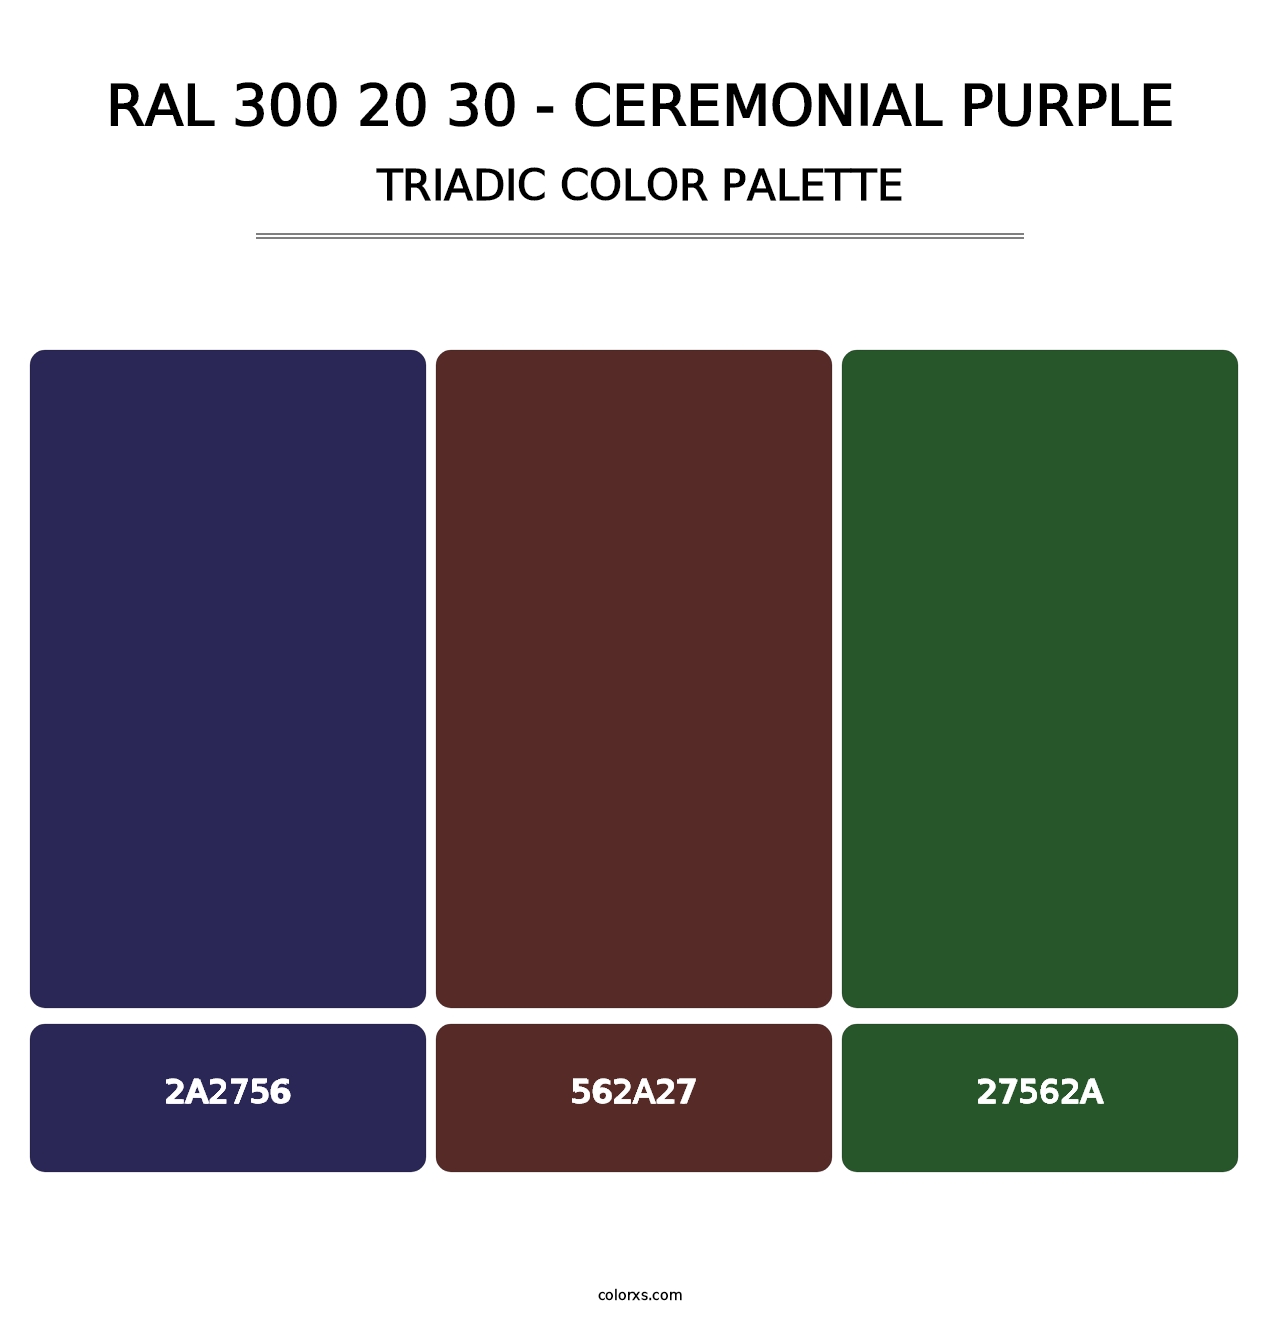 RAL 300 20 30 - Ceremonial Purple - Triadic Color Palette